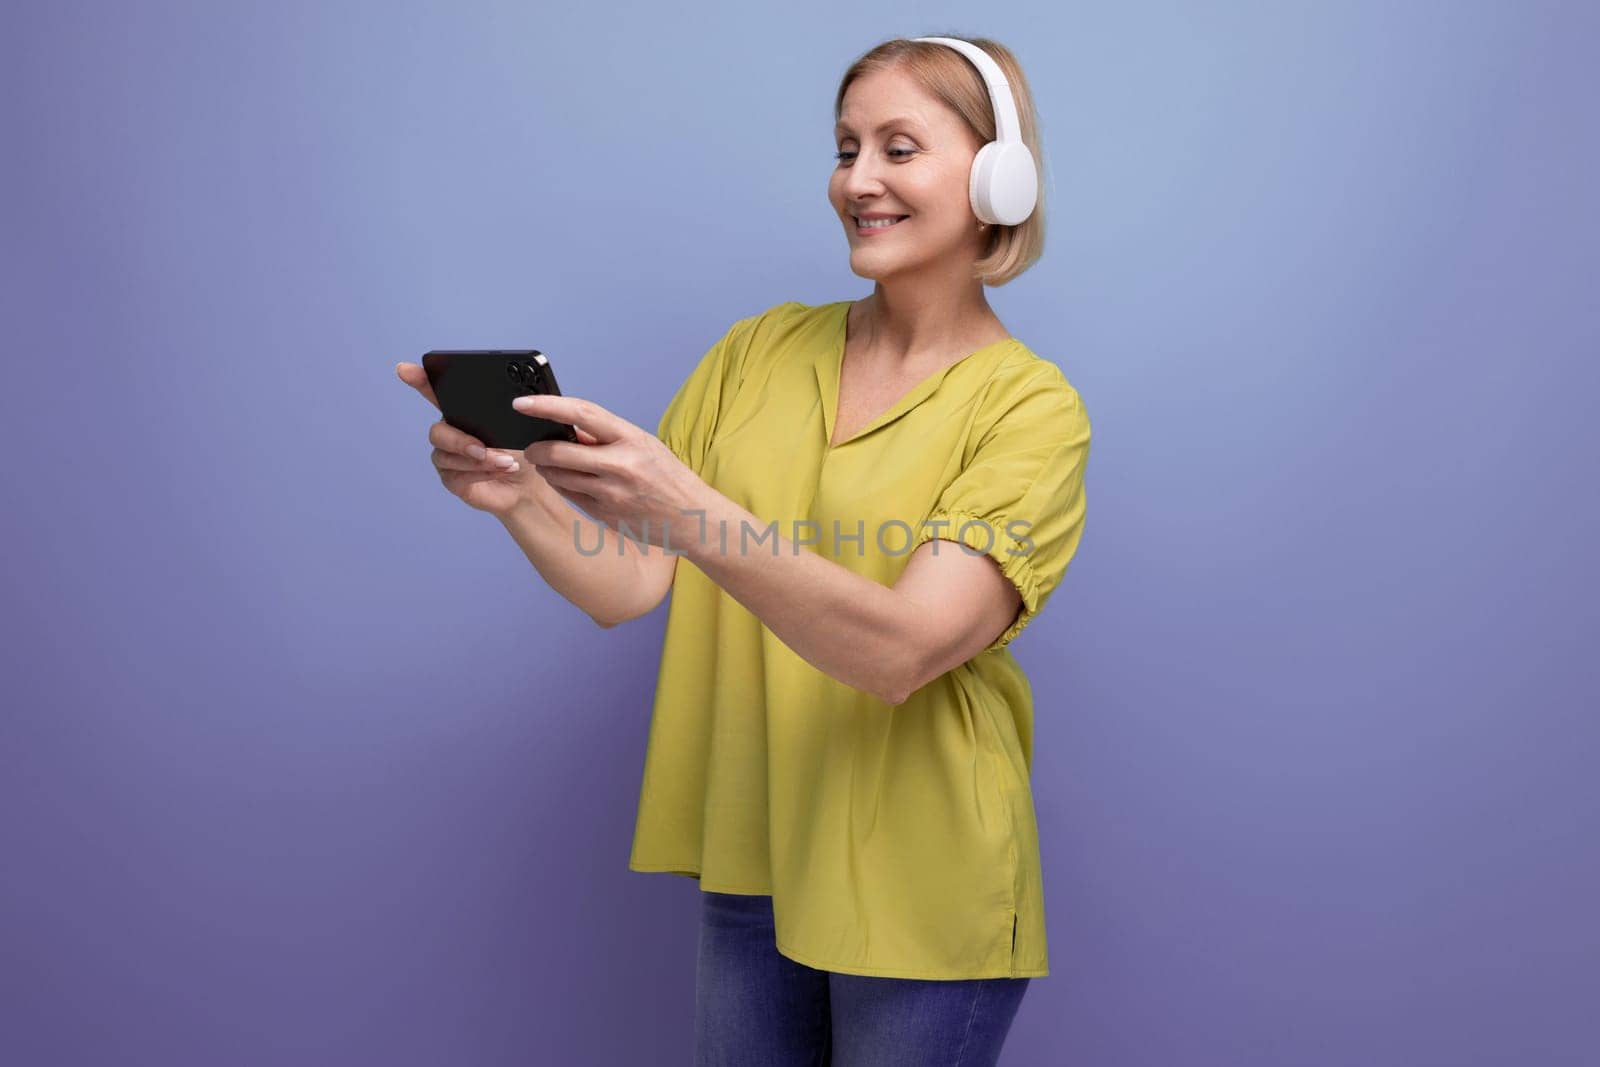 blonde 50s woman watching broadcast on smartphone using headphones.